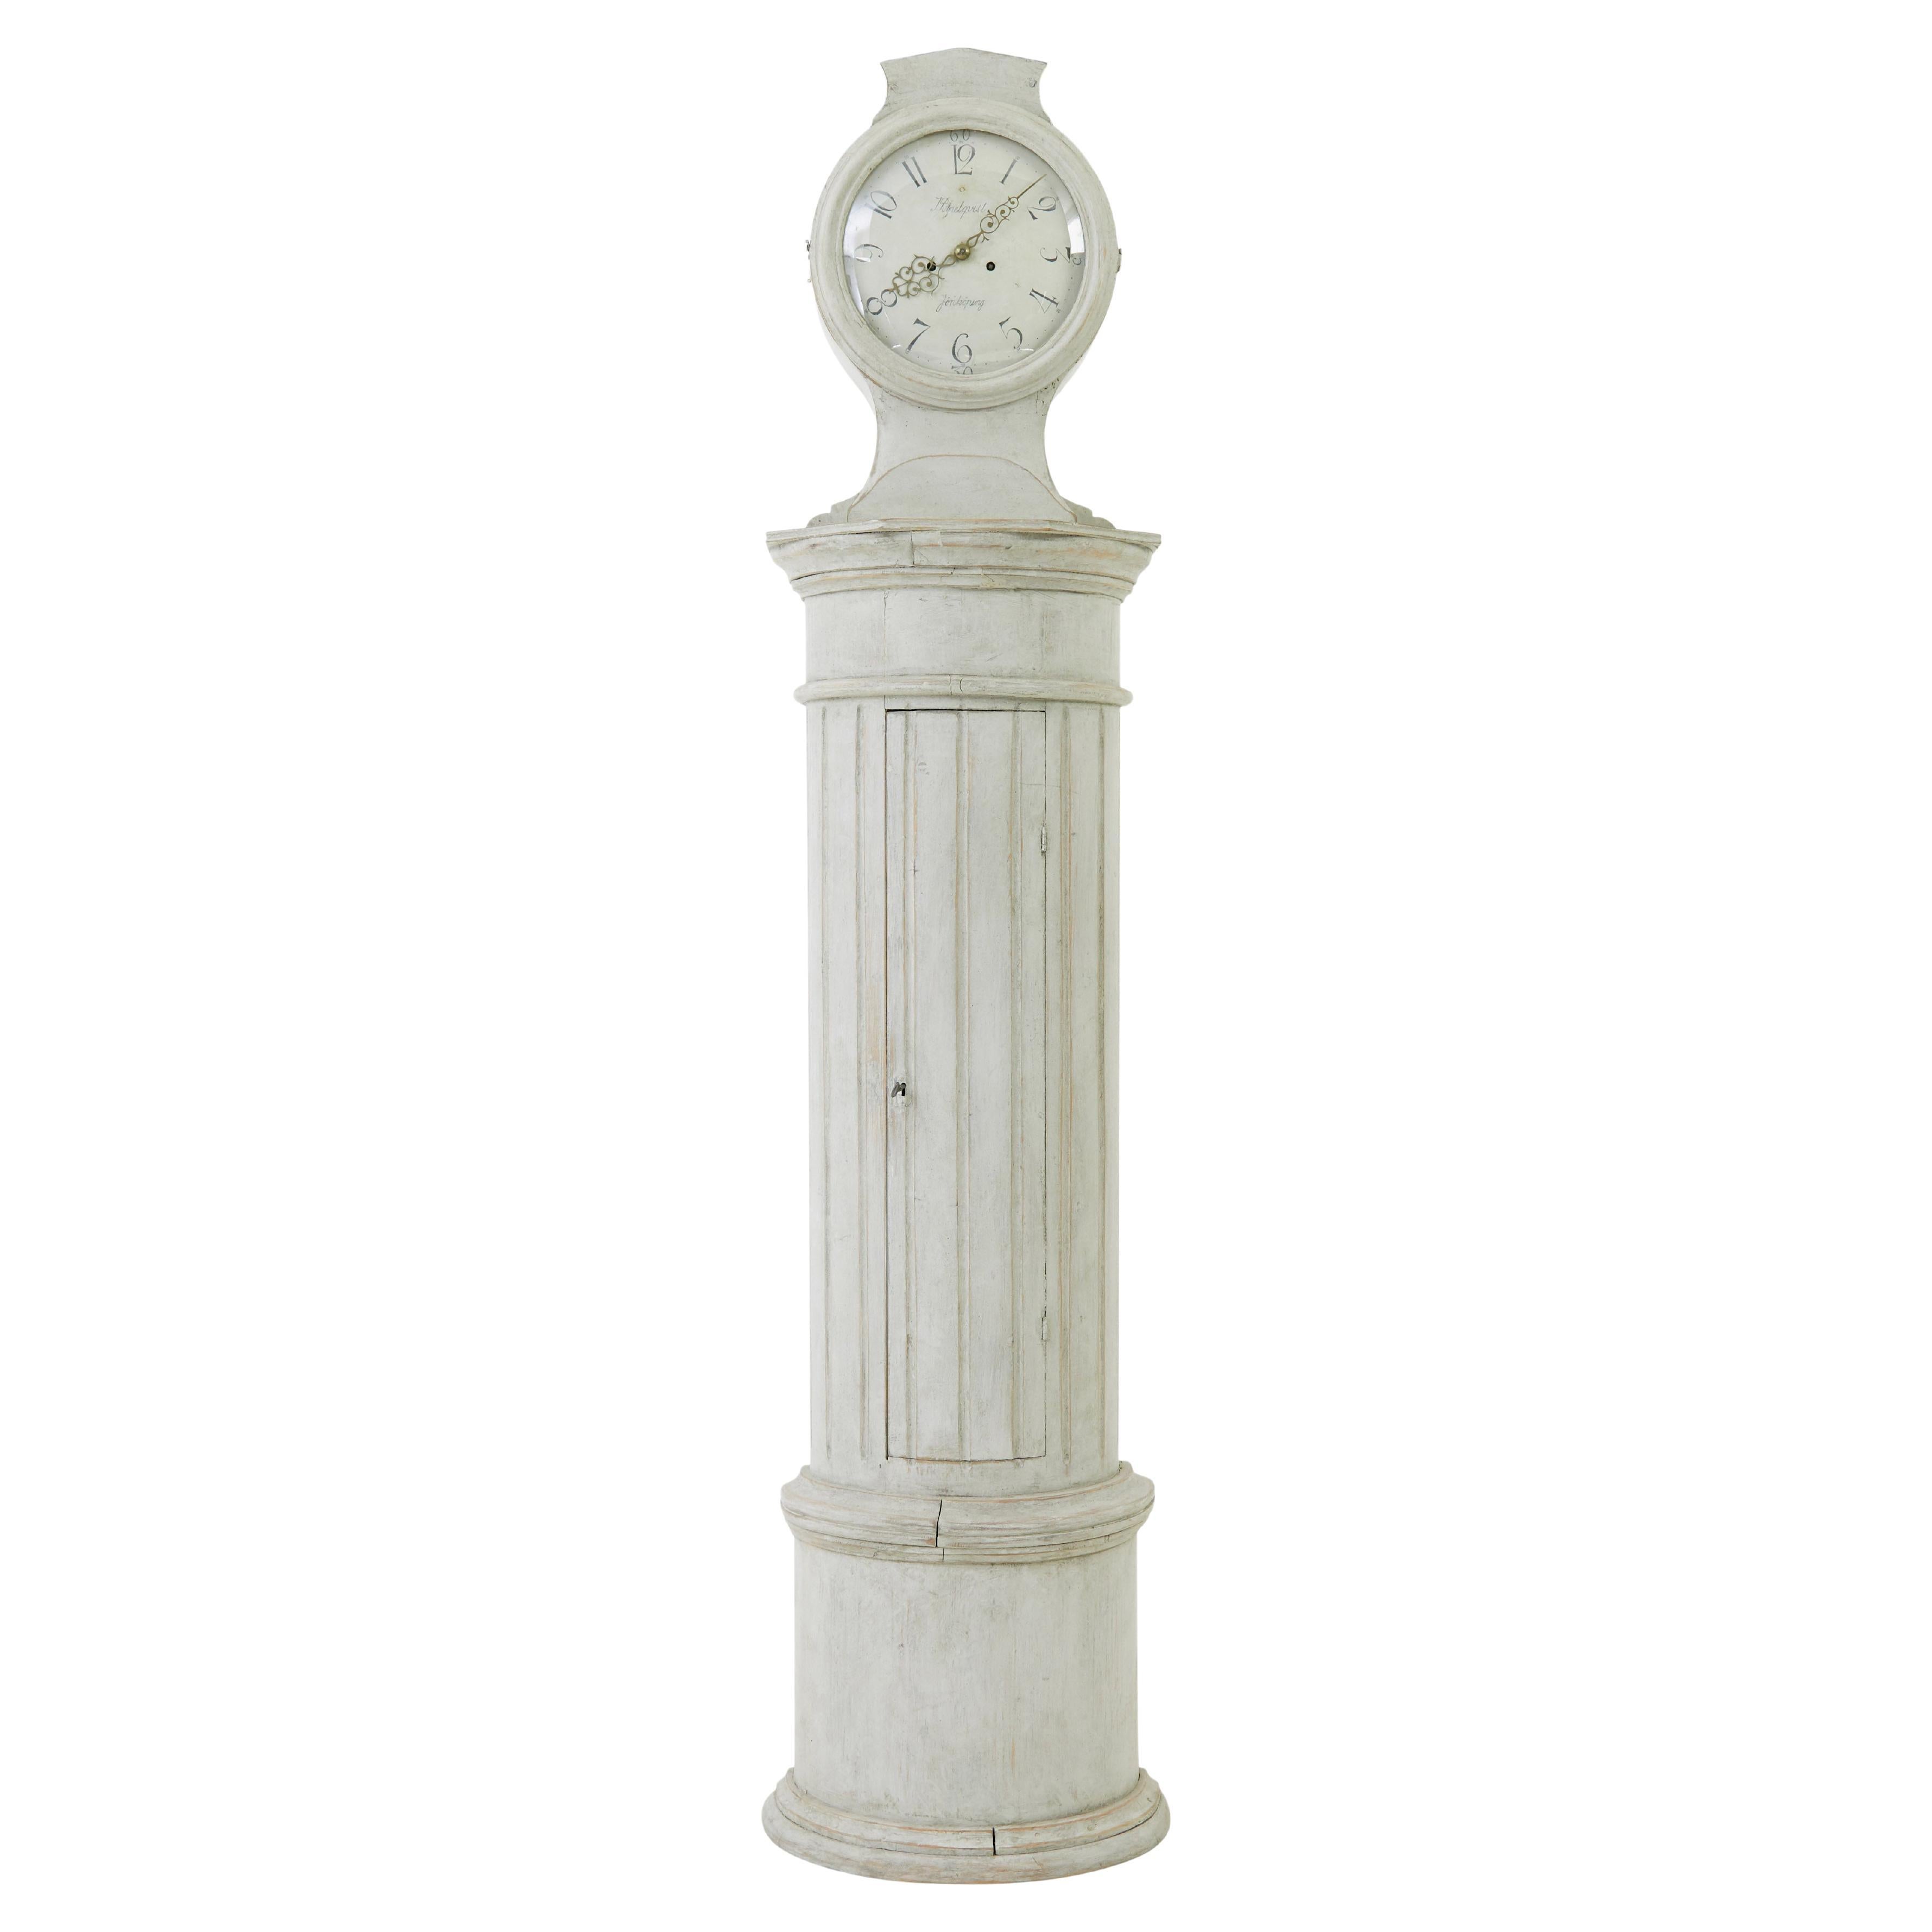 Mid 19th century Swedish decorative column long case clock